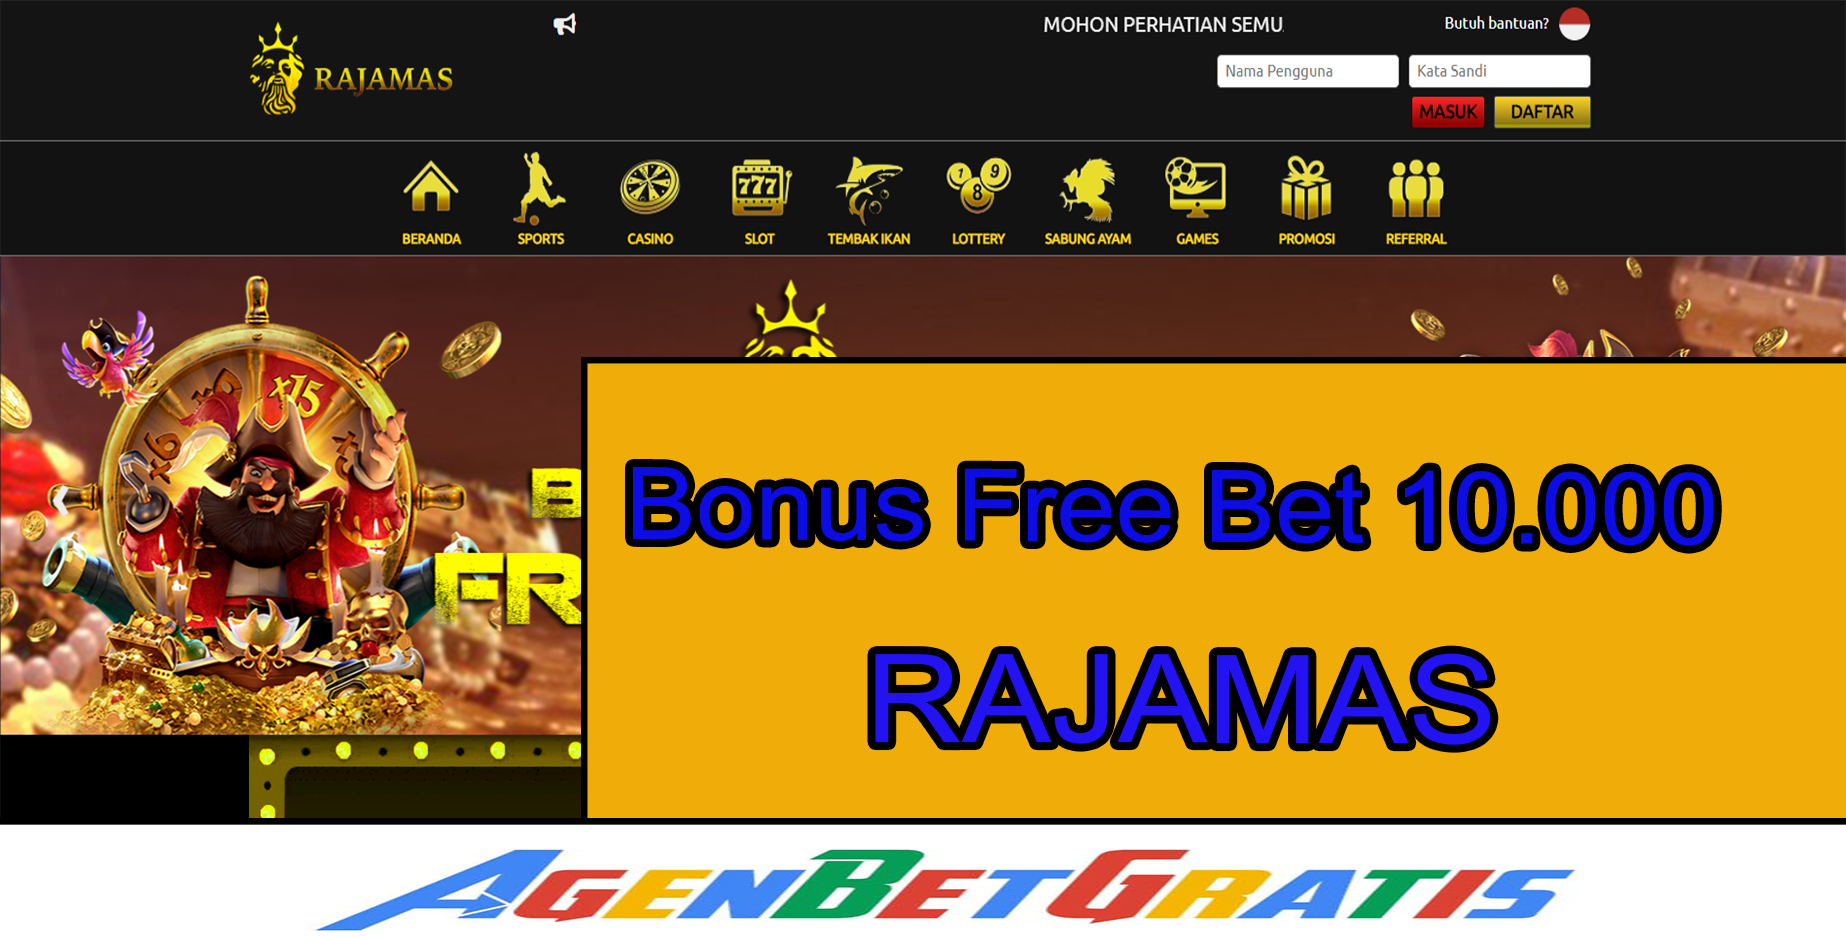 RAJAMAS - Bonus FreeBet 10.000